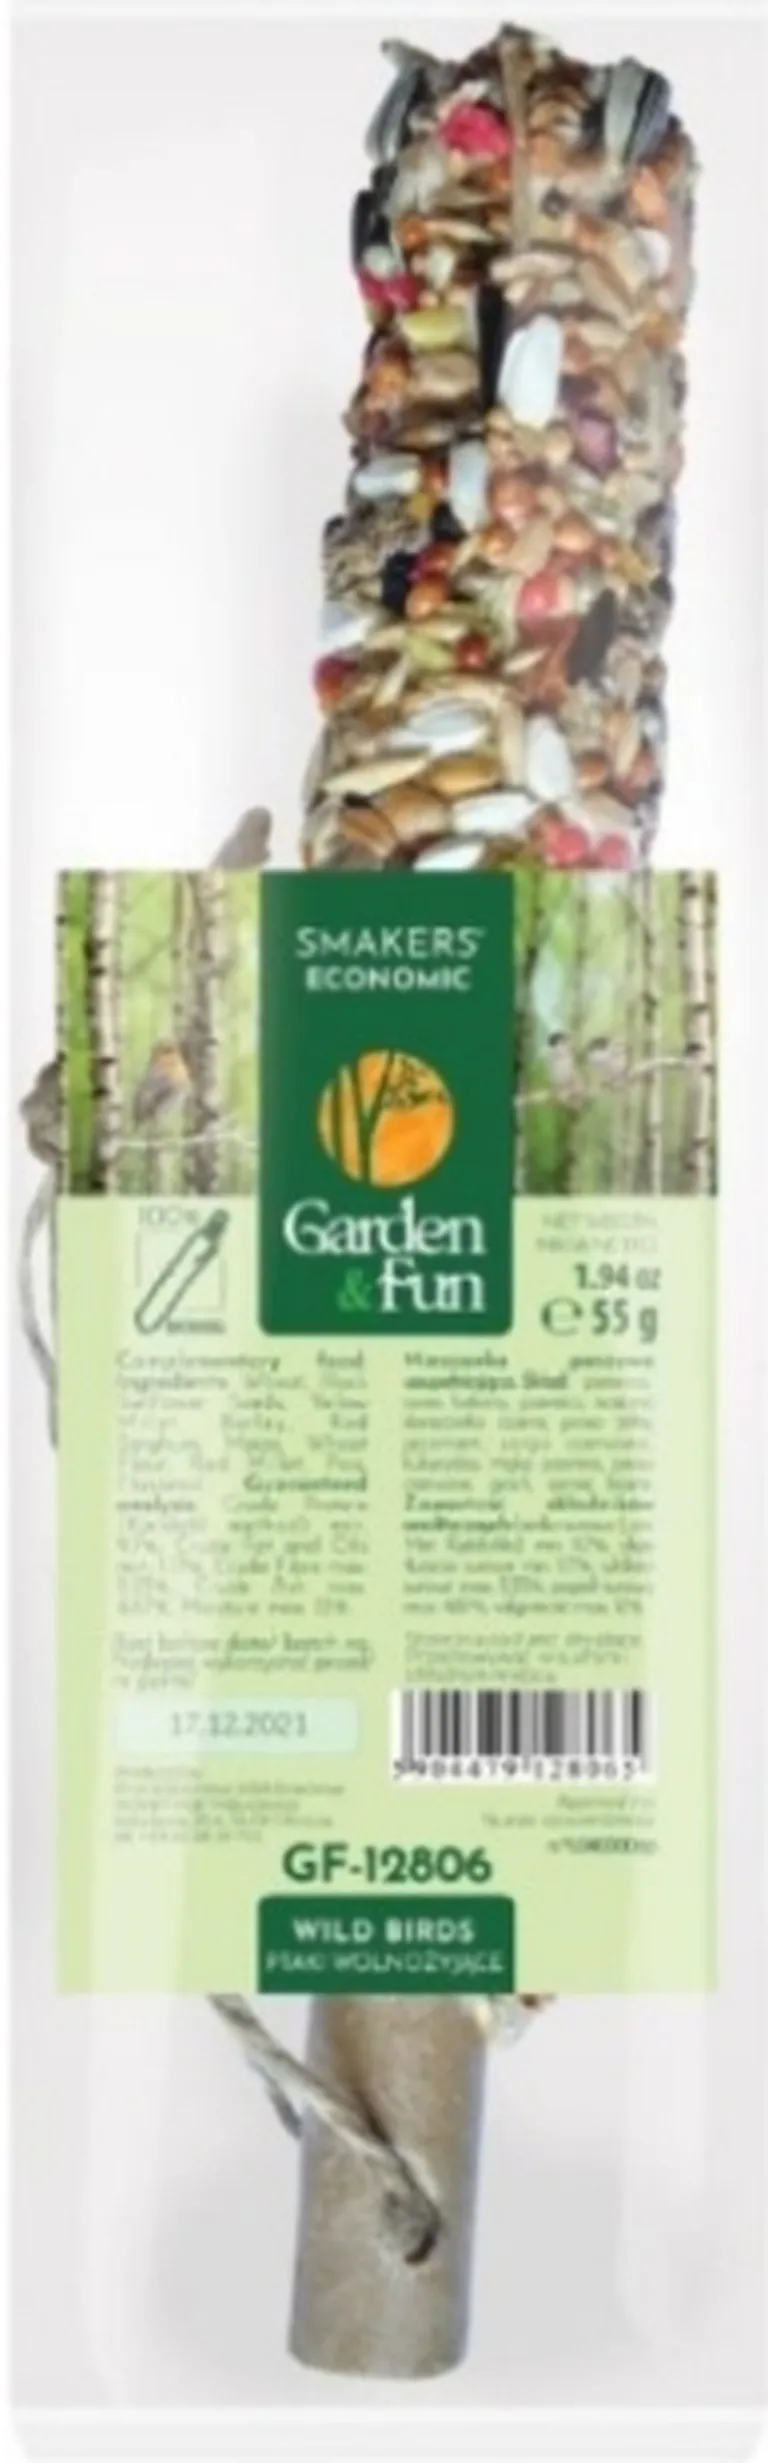 AE Cage Company Garden and Fun Backyard Bird Select Seed Stick Photo 1